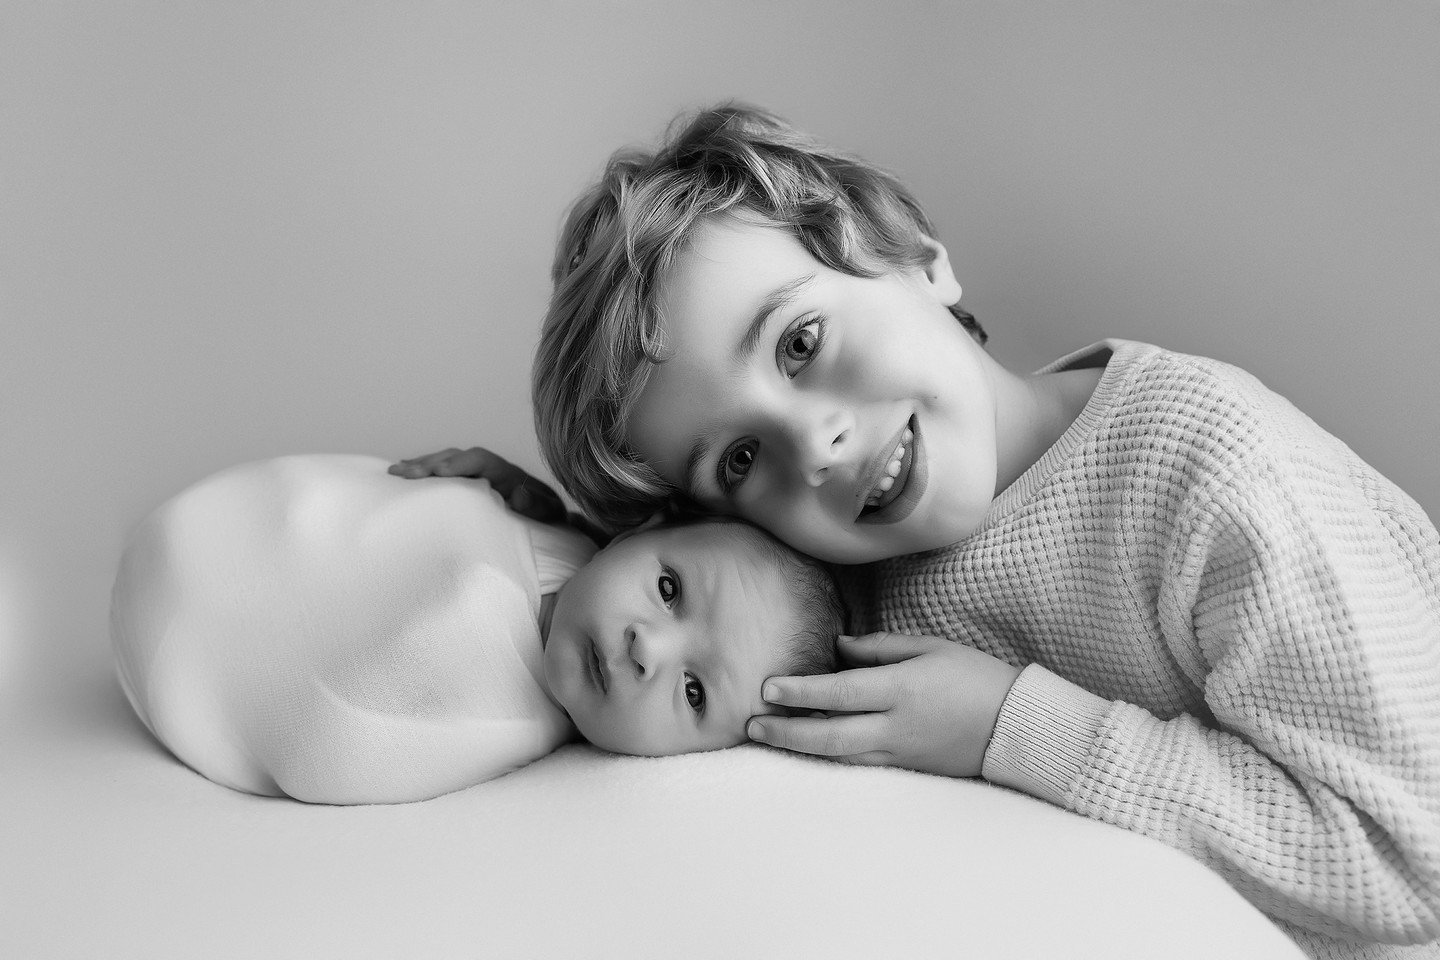 Sibling Love 😍🥰
#ocbaby #ocbabyphotography #orangecountybaby #LAbabyphotograpphy #orangecountyportraitstudio #ocmotherhood #cutebaby